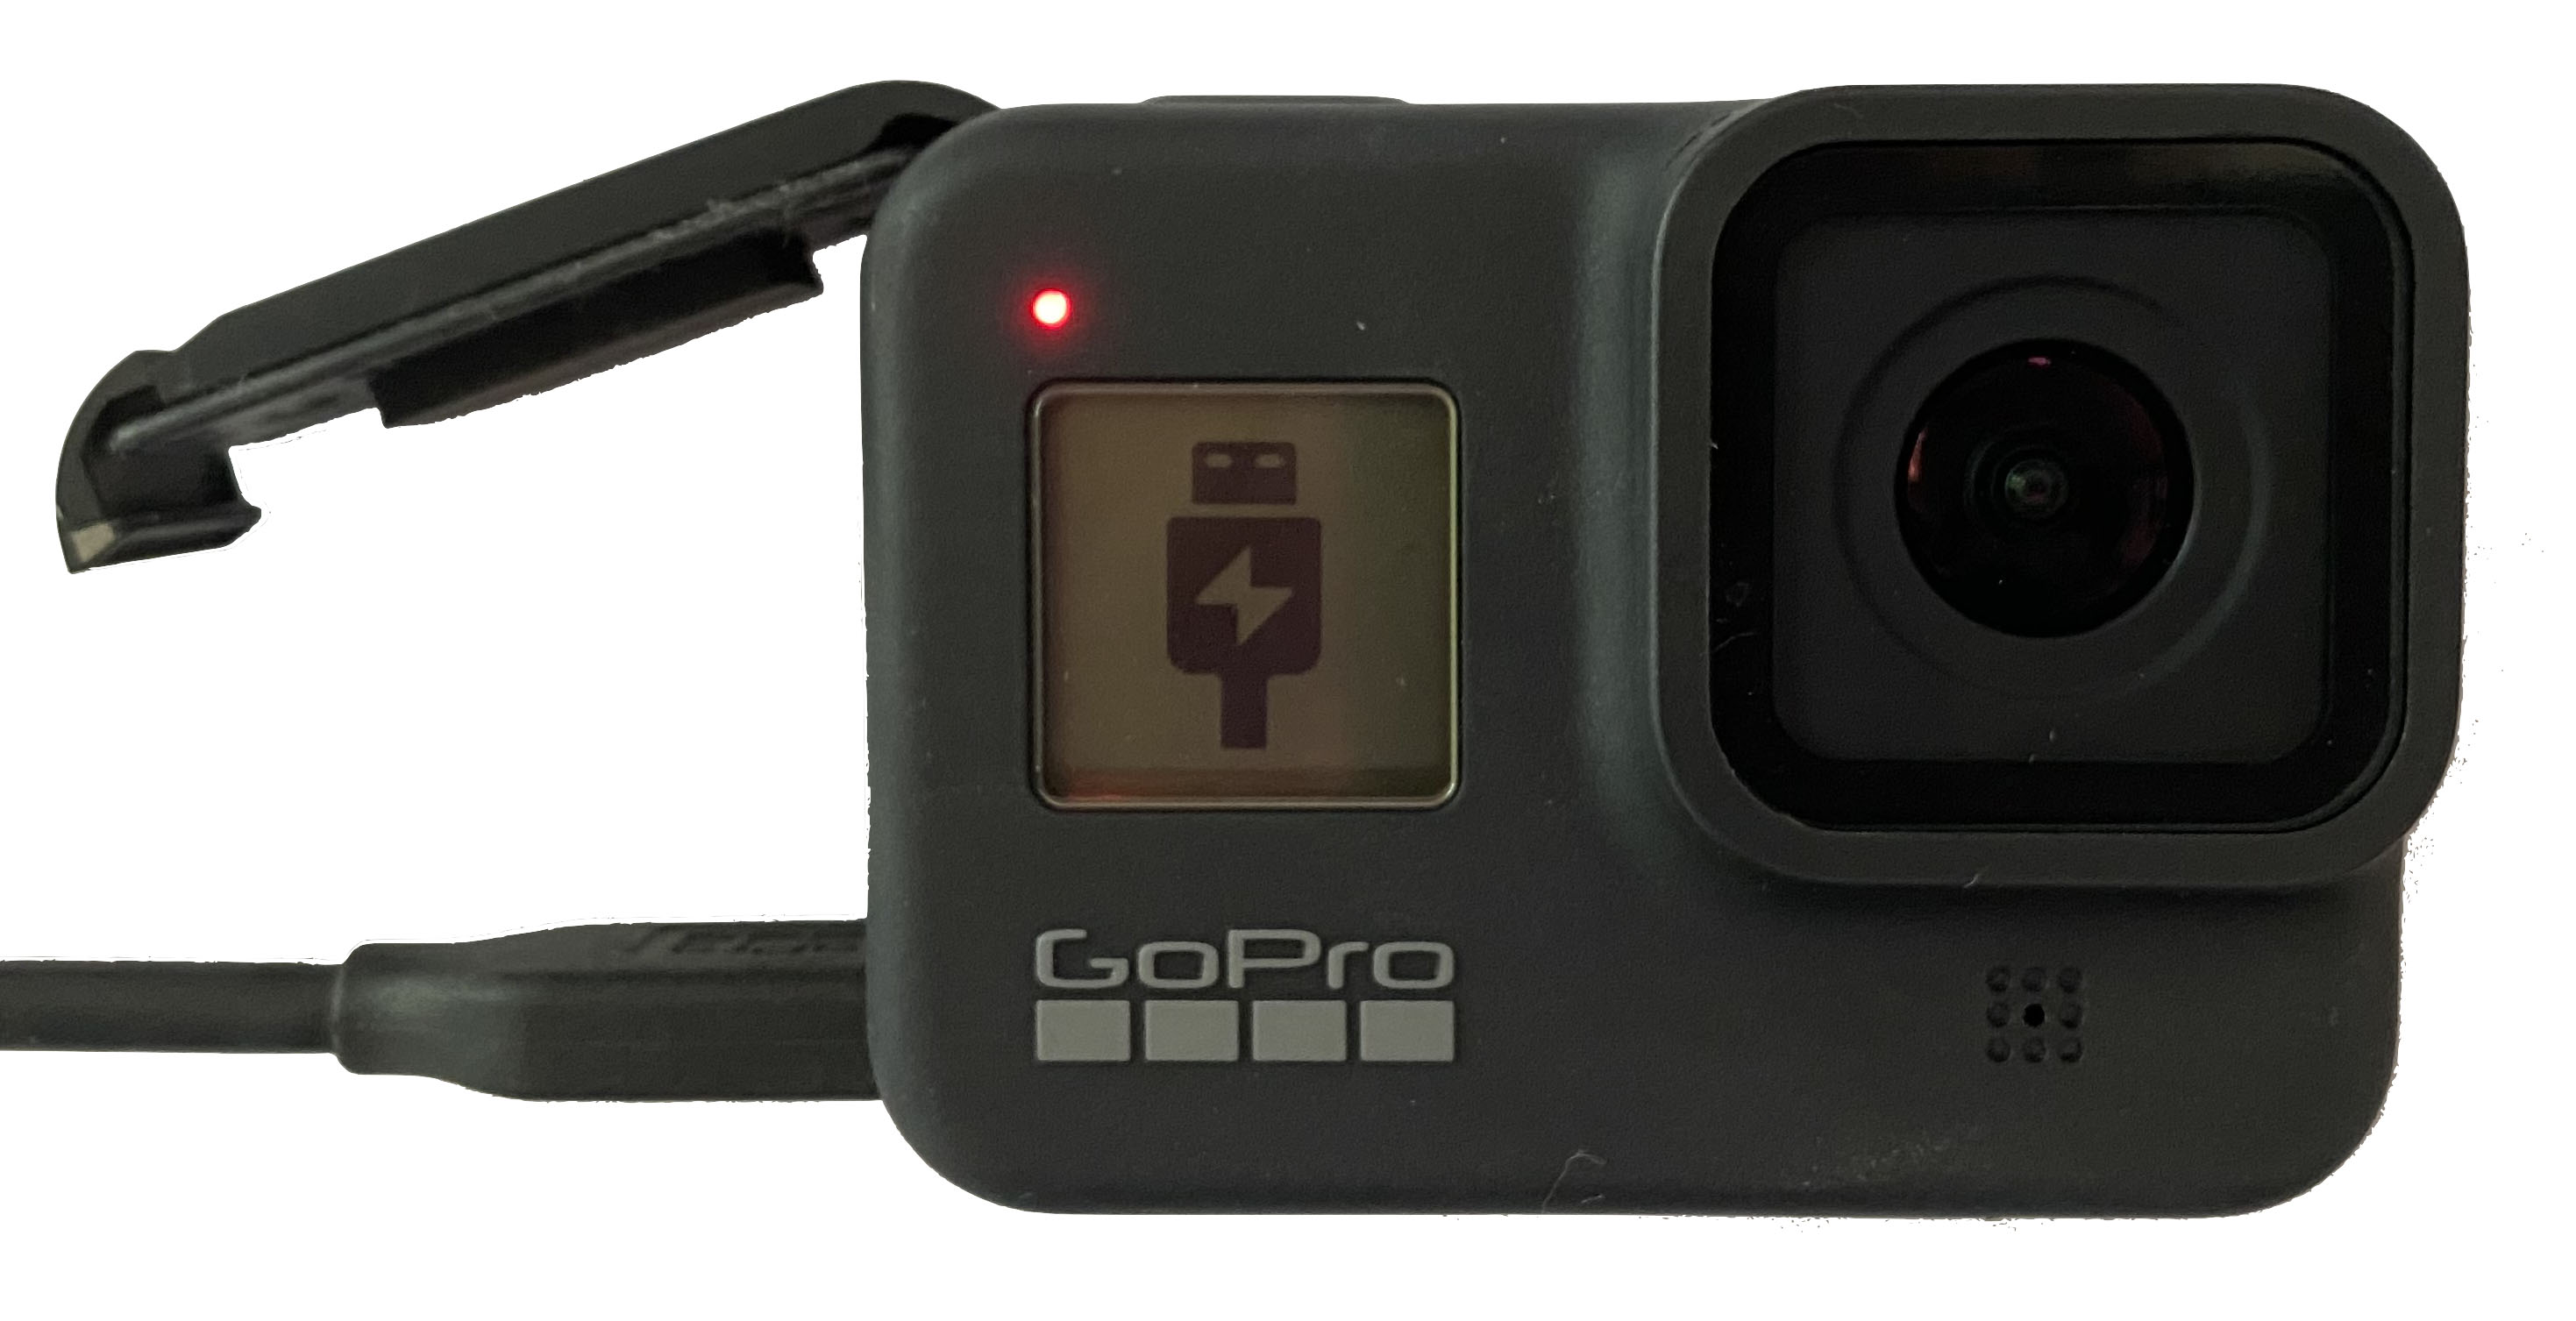 Macでgoproがwebカメラになるアプリ公開 Hero8 Blackで Itmedia News